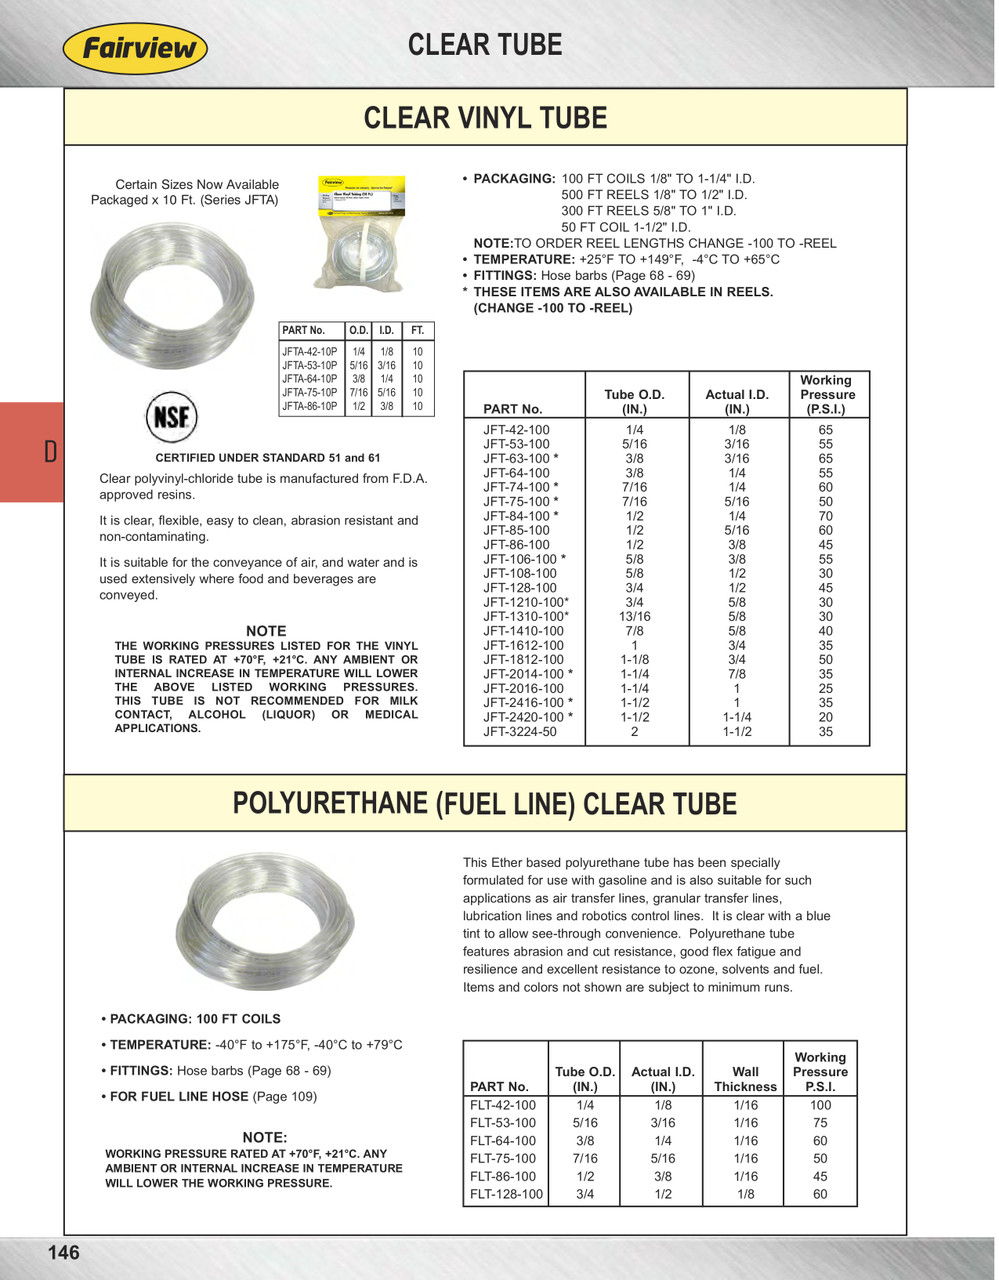 1-1/2 x 1" x 1' Clear PVC Non-Reinforced Hose  JFT-2416-CUT